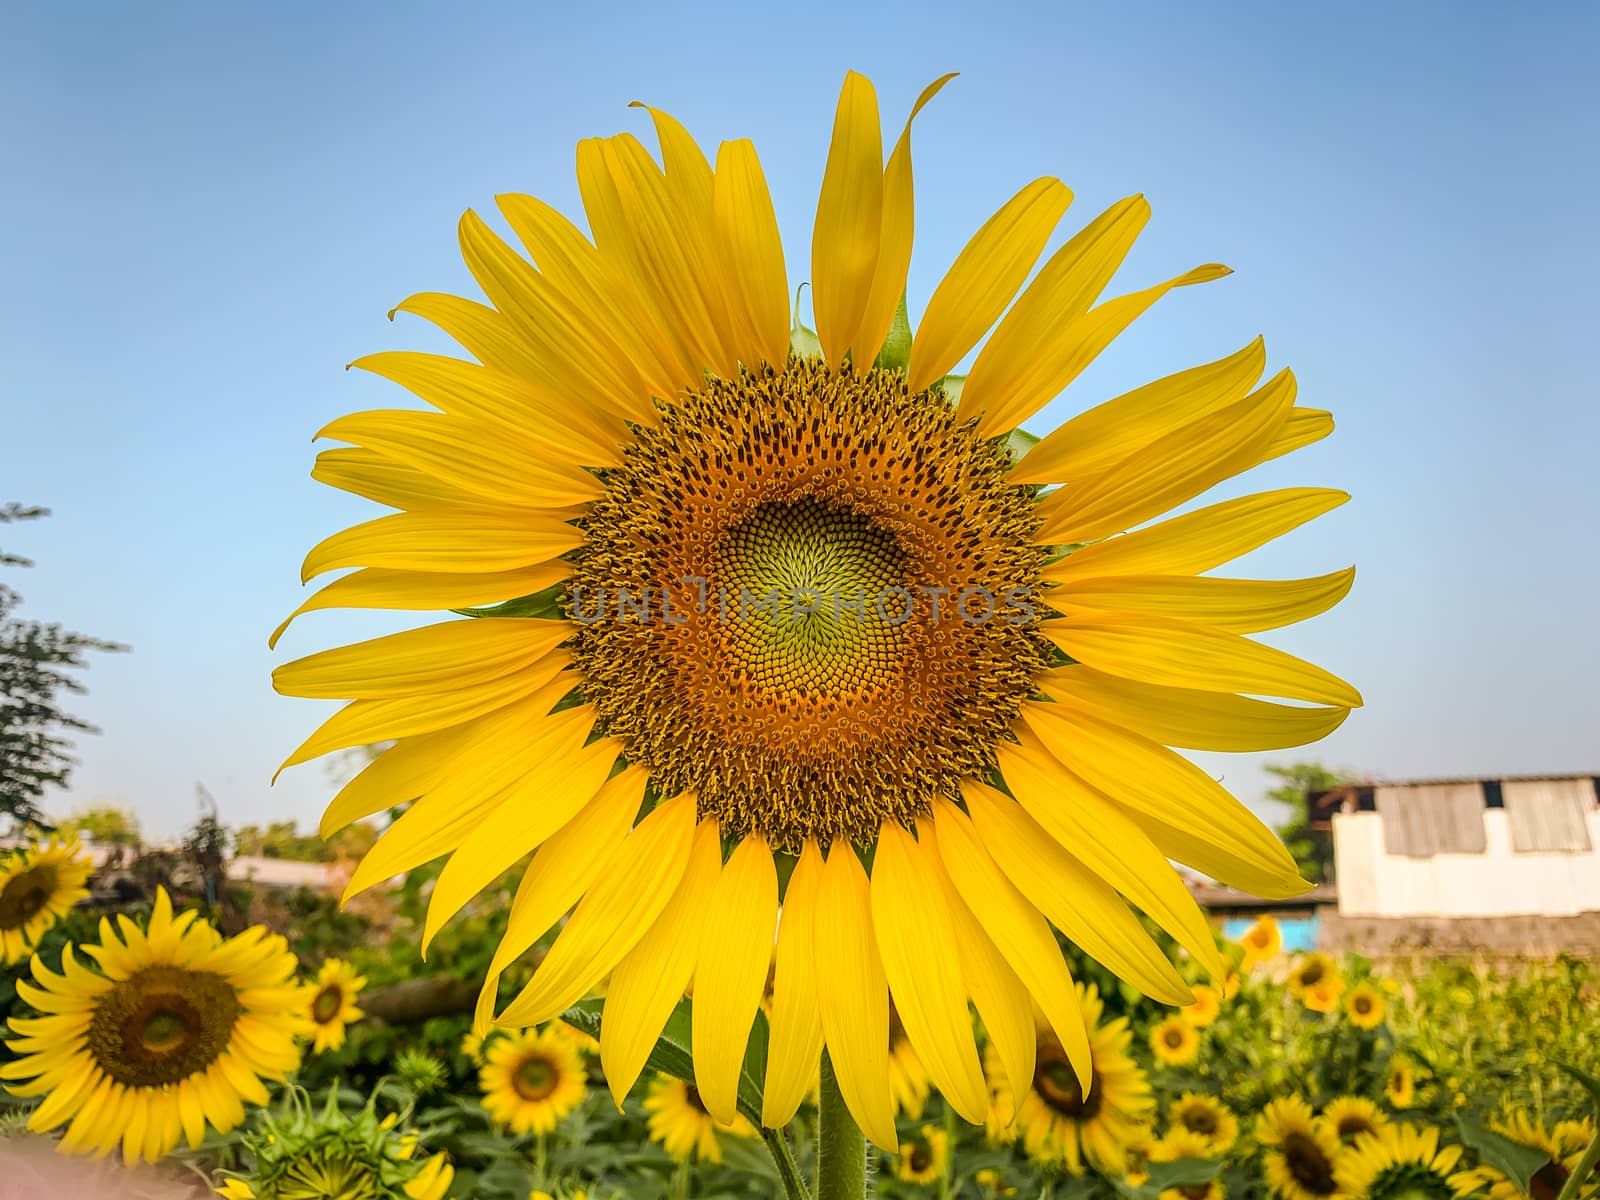 Sunflower in sunny outdoor garden